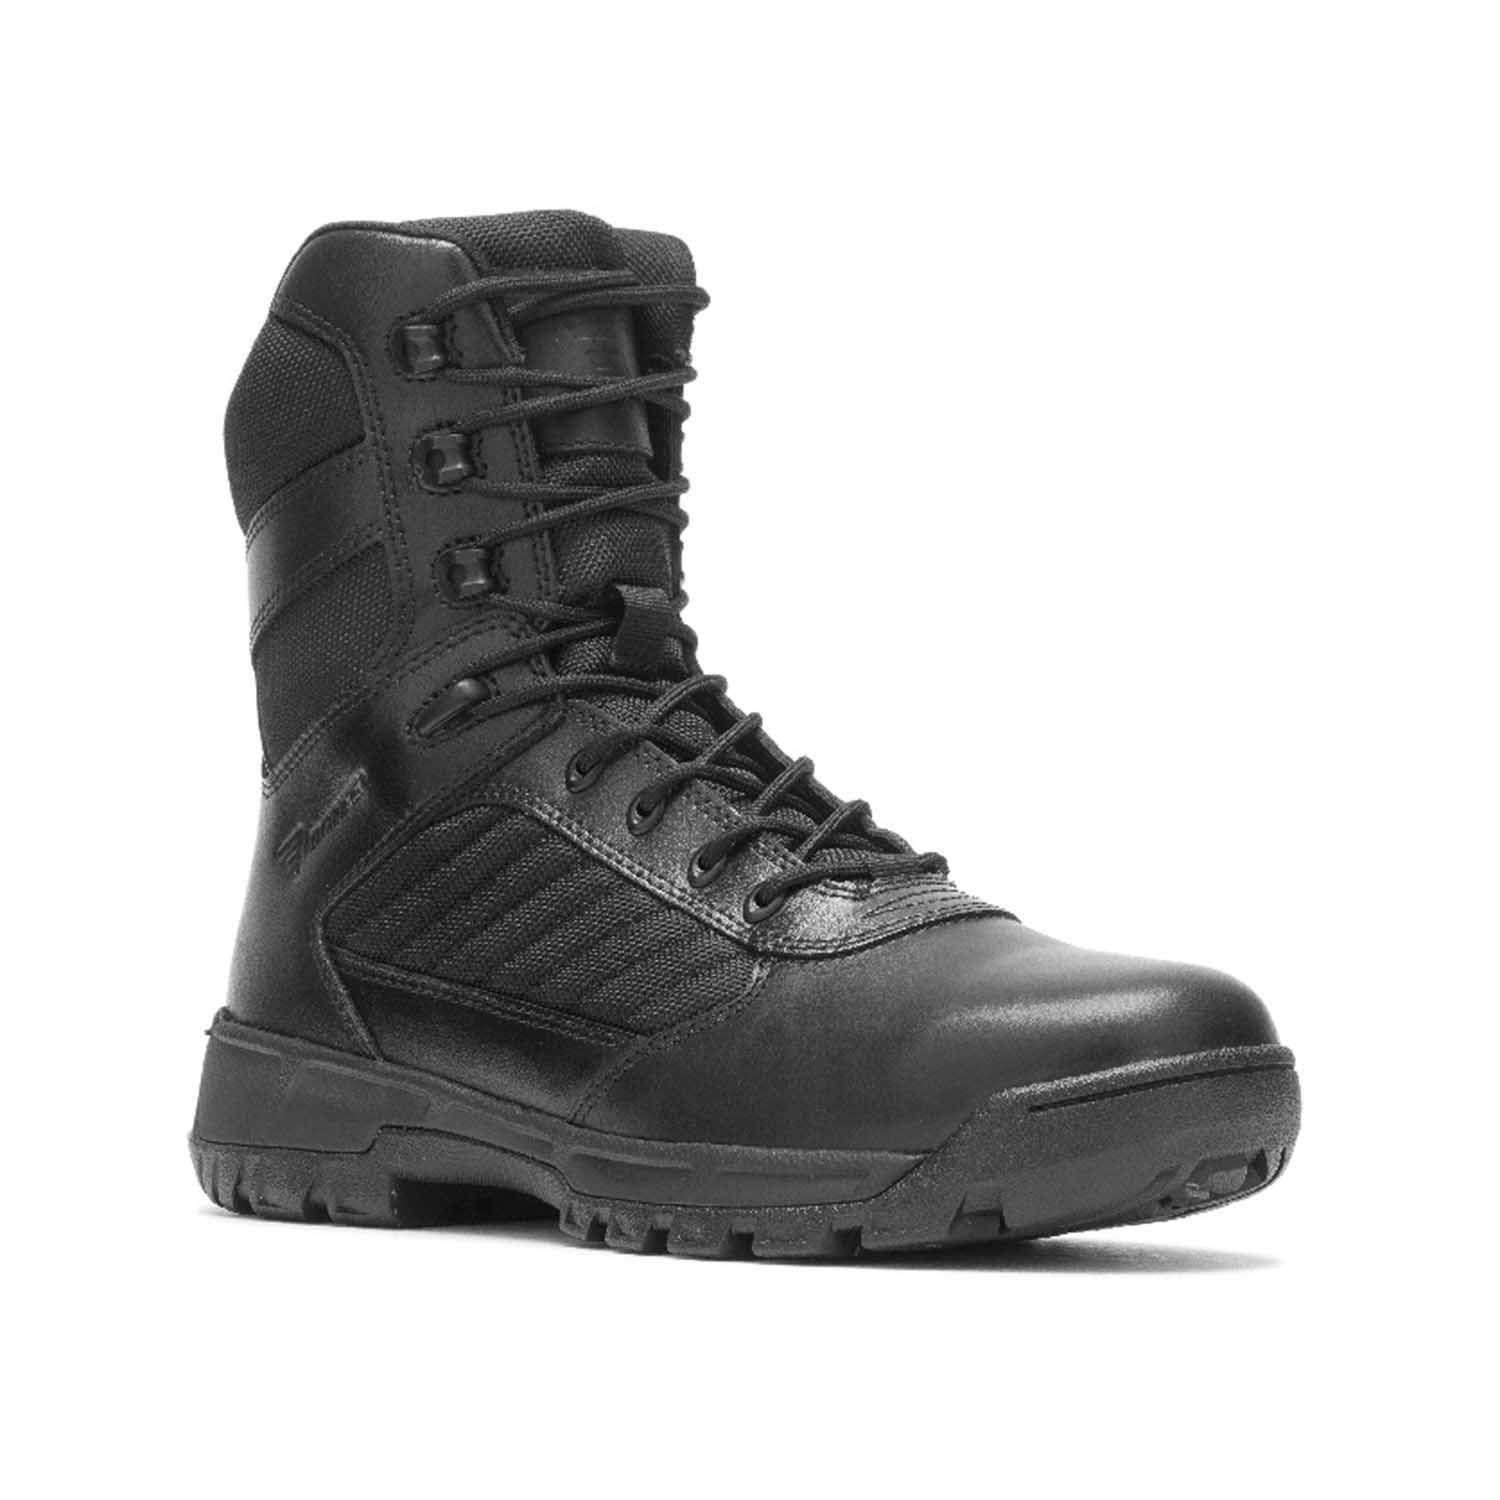 Bates Tactical Sport 2 Tall Side-Zip Boots | Bates Boots